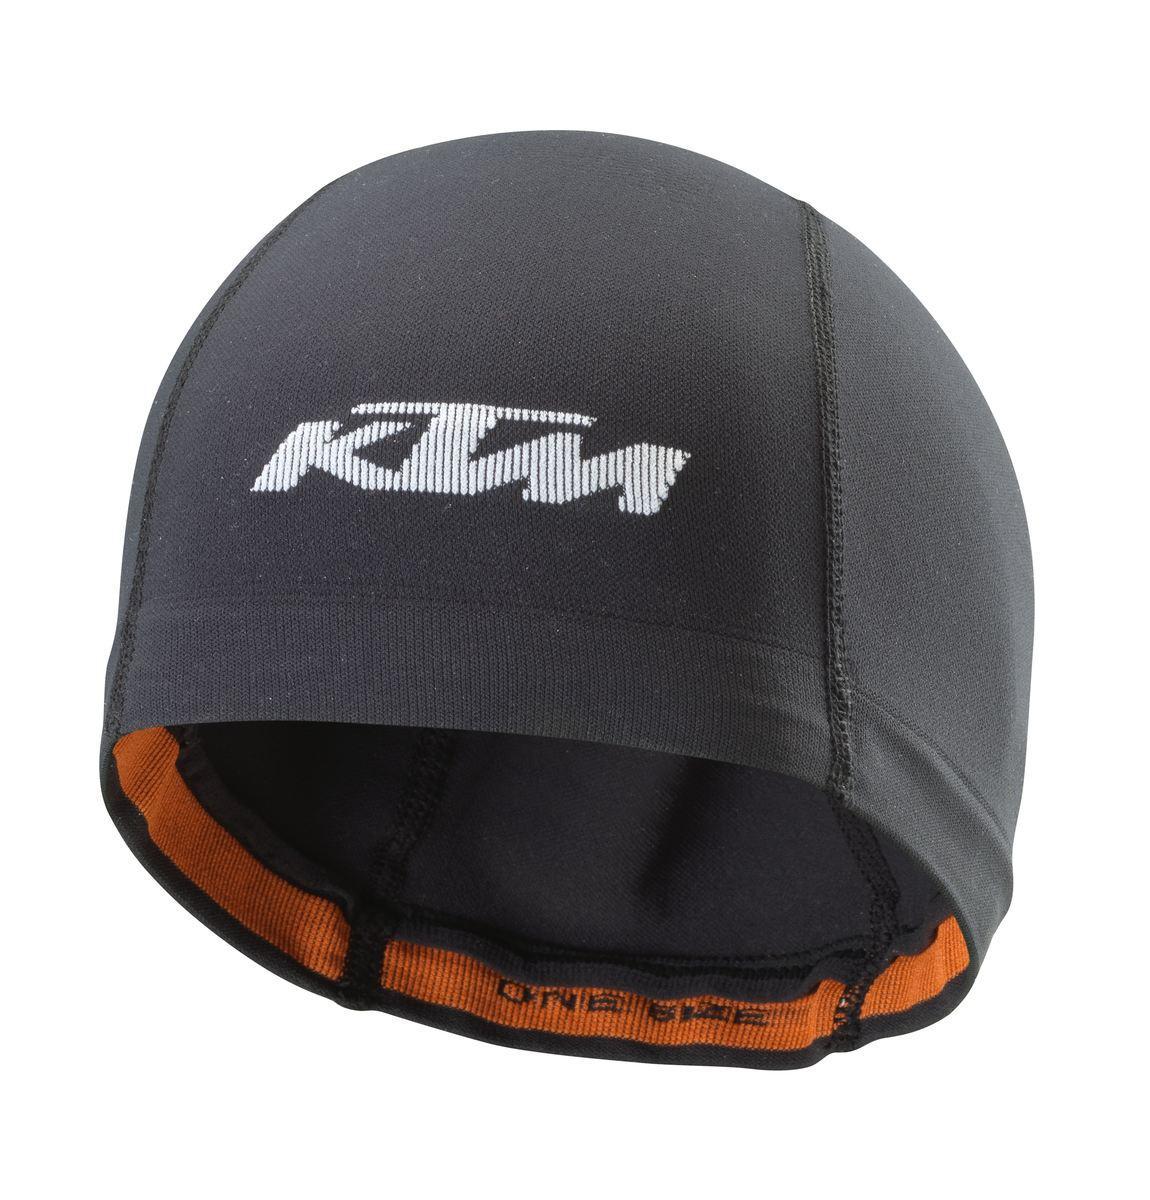 Selected image for KTM-MOTO Potkapa crna